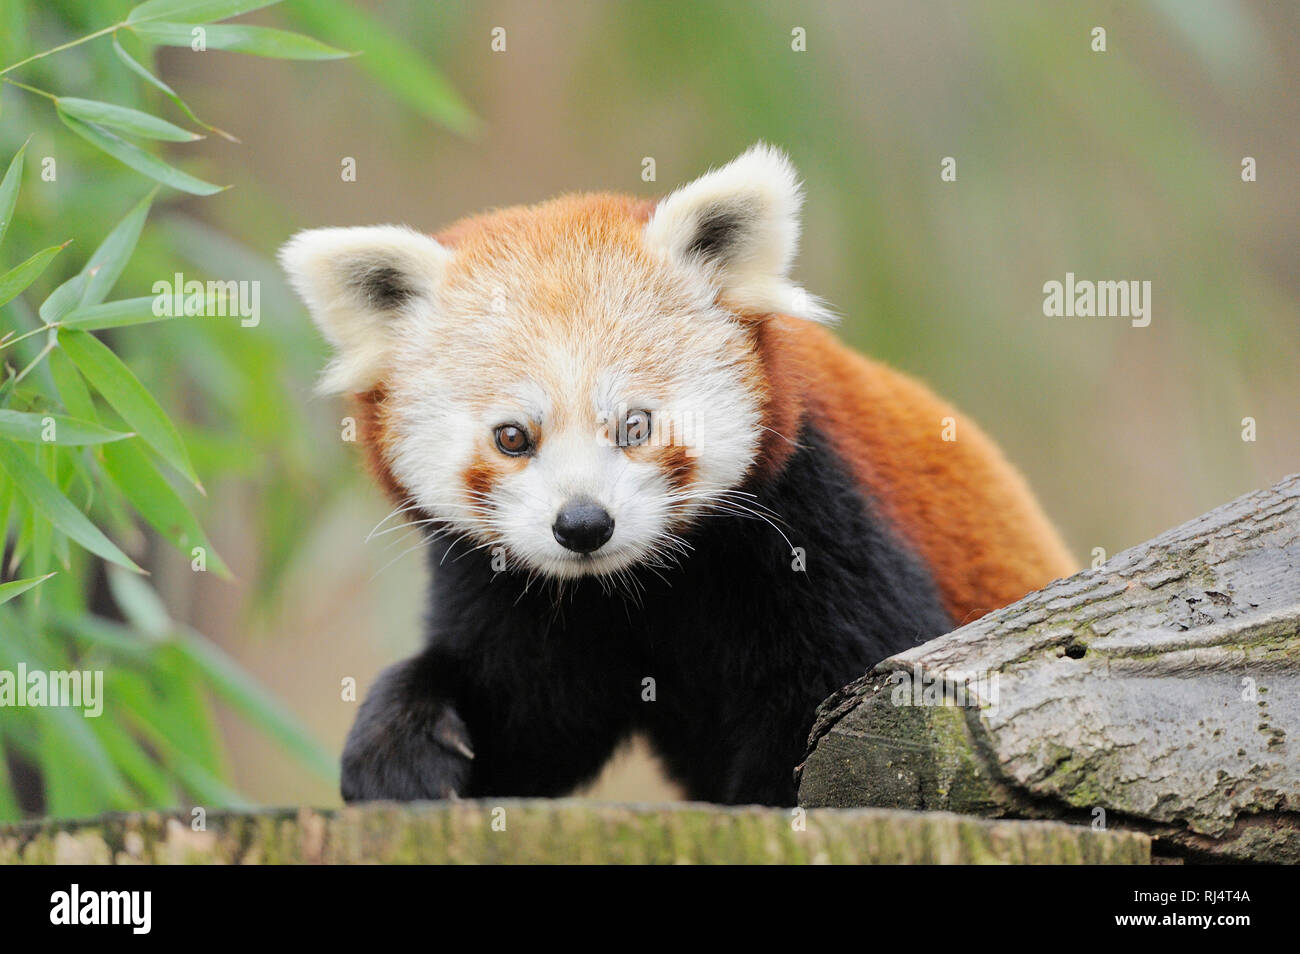 Kleiner Panda, Ailurus fulgens, Baumstamm, frontale, Blick Kamera Foto Stock